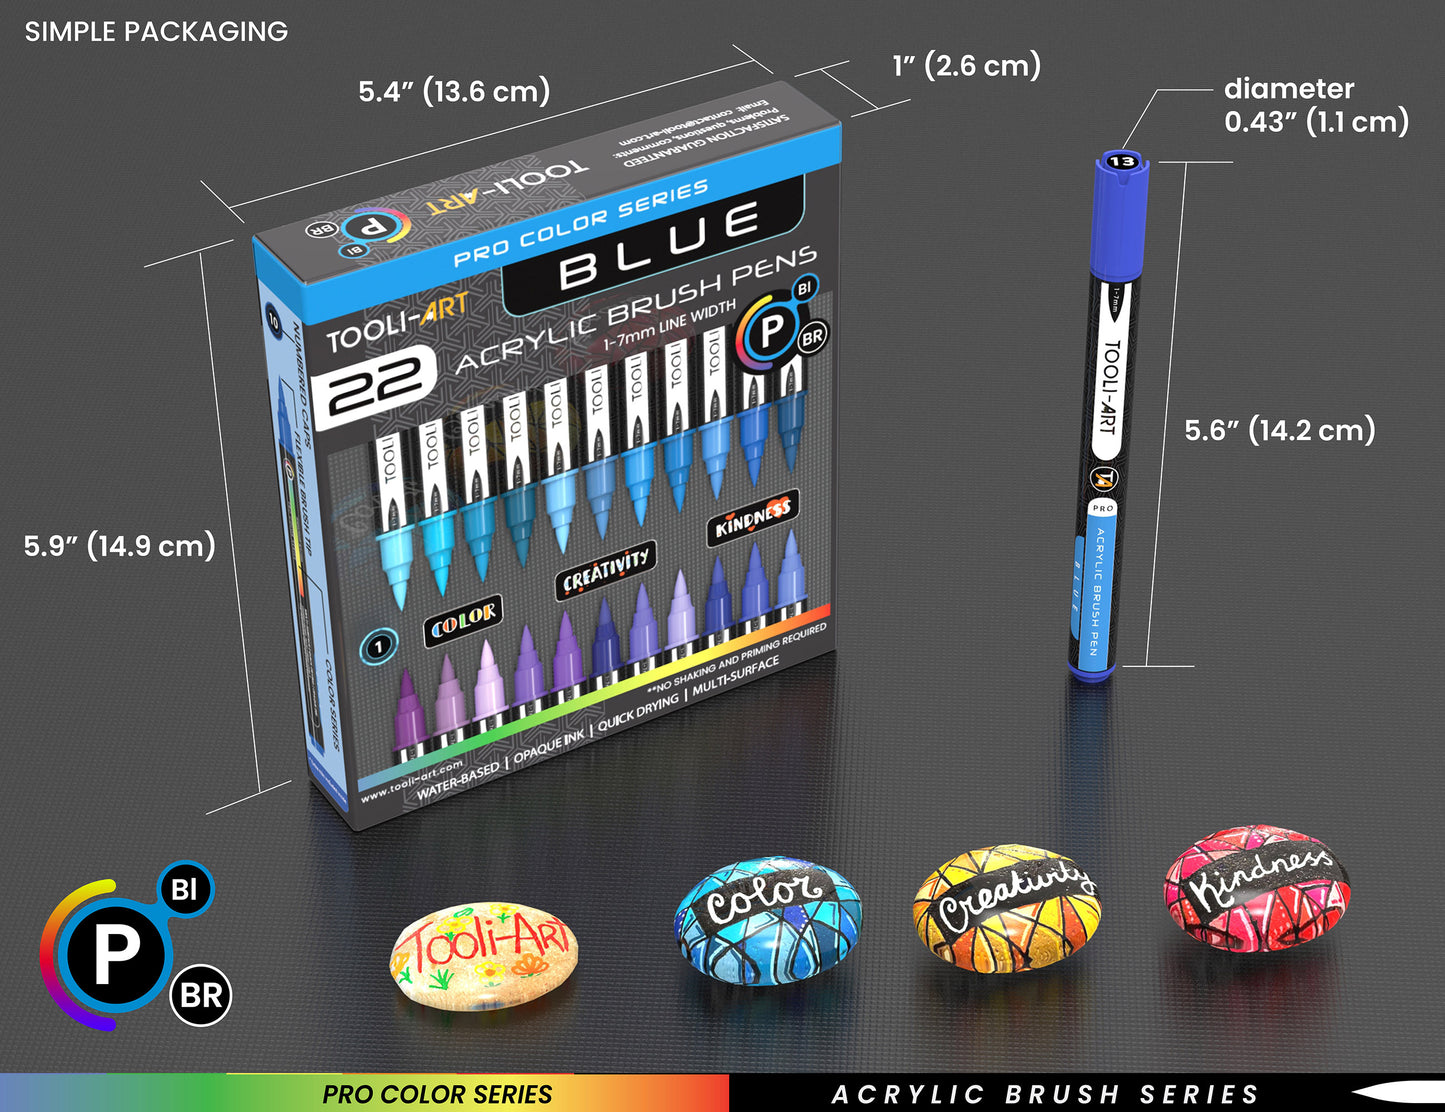 22 Flexible Brush Tip Acrylic Paint Pens Markers Set 1-7mm (BLUE)